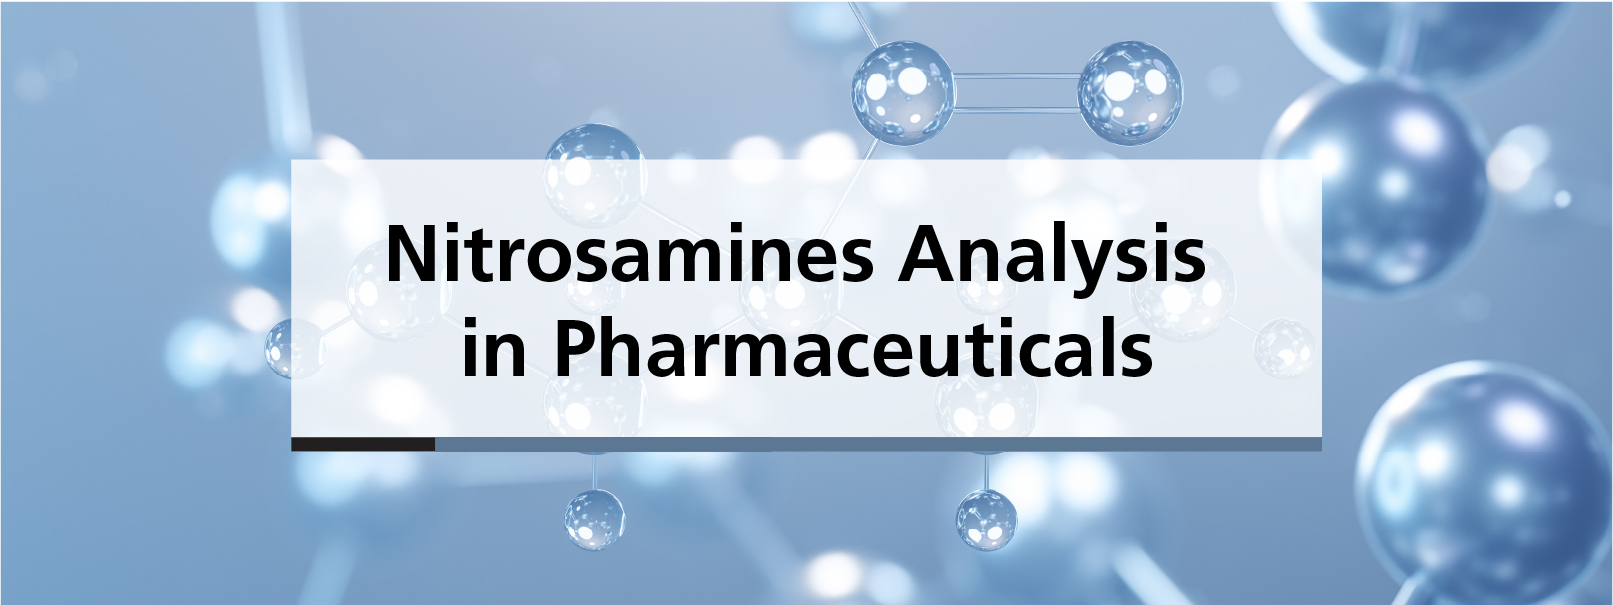 Nitrosamines Analysis in Pharmaceuticals